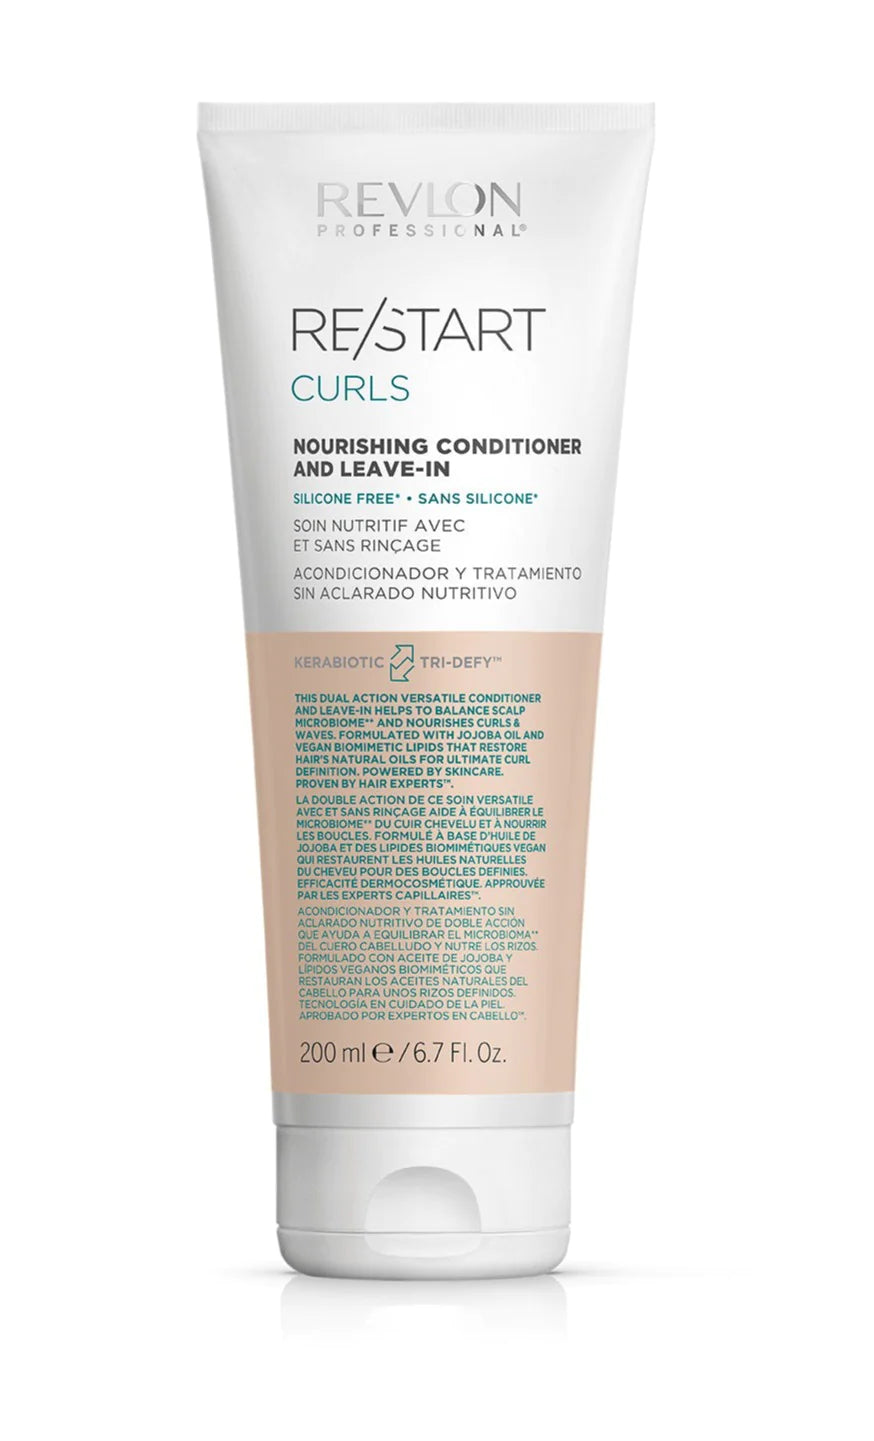 ReStart Curl Nourishing Conditioner